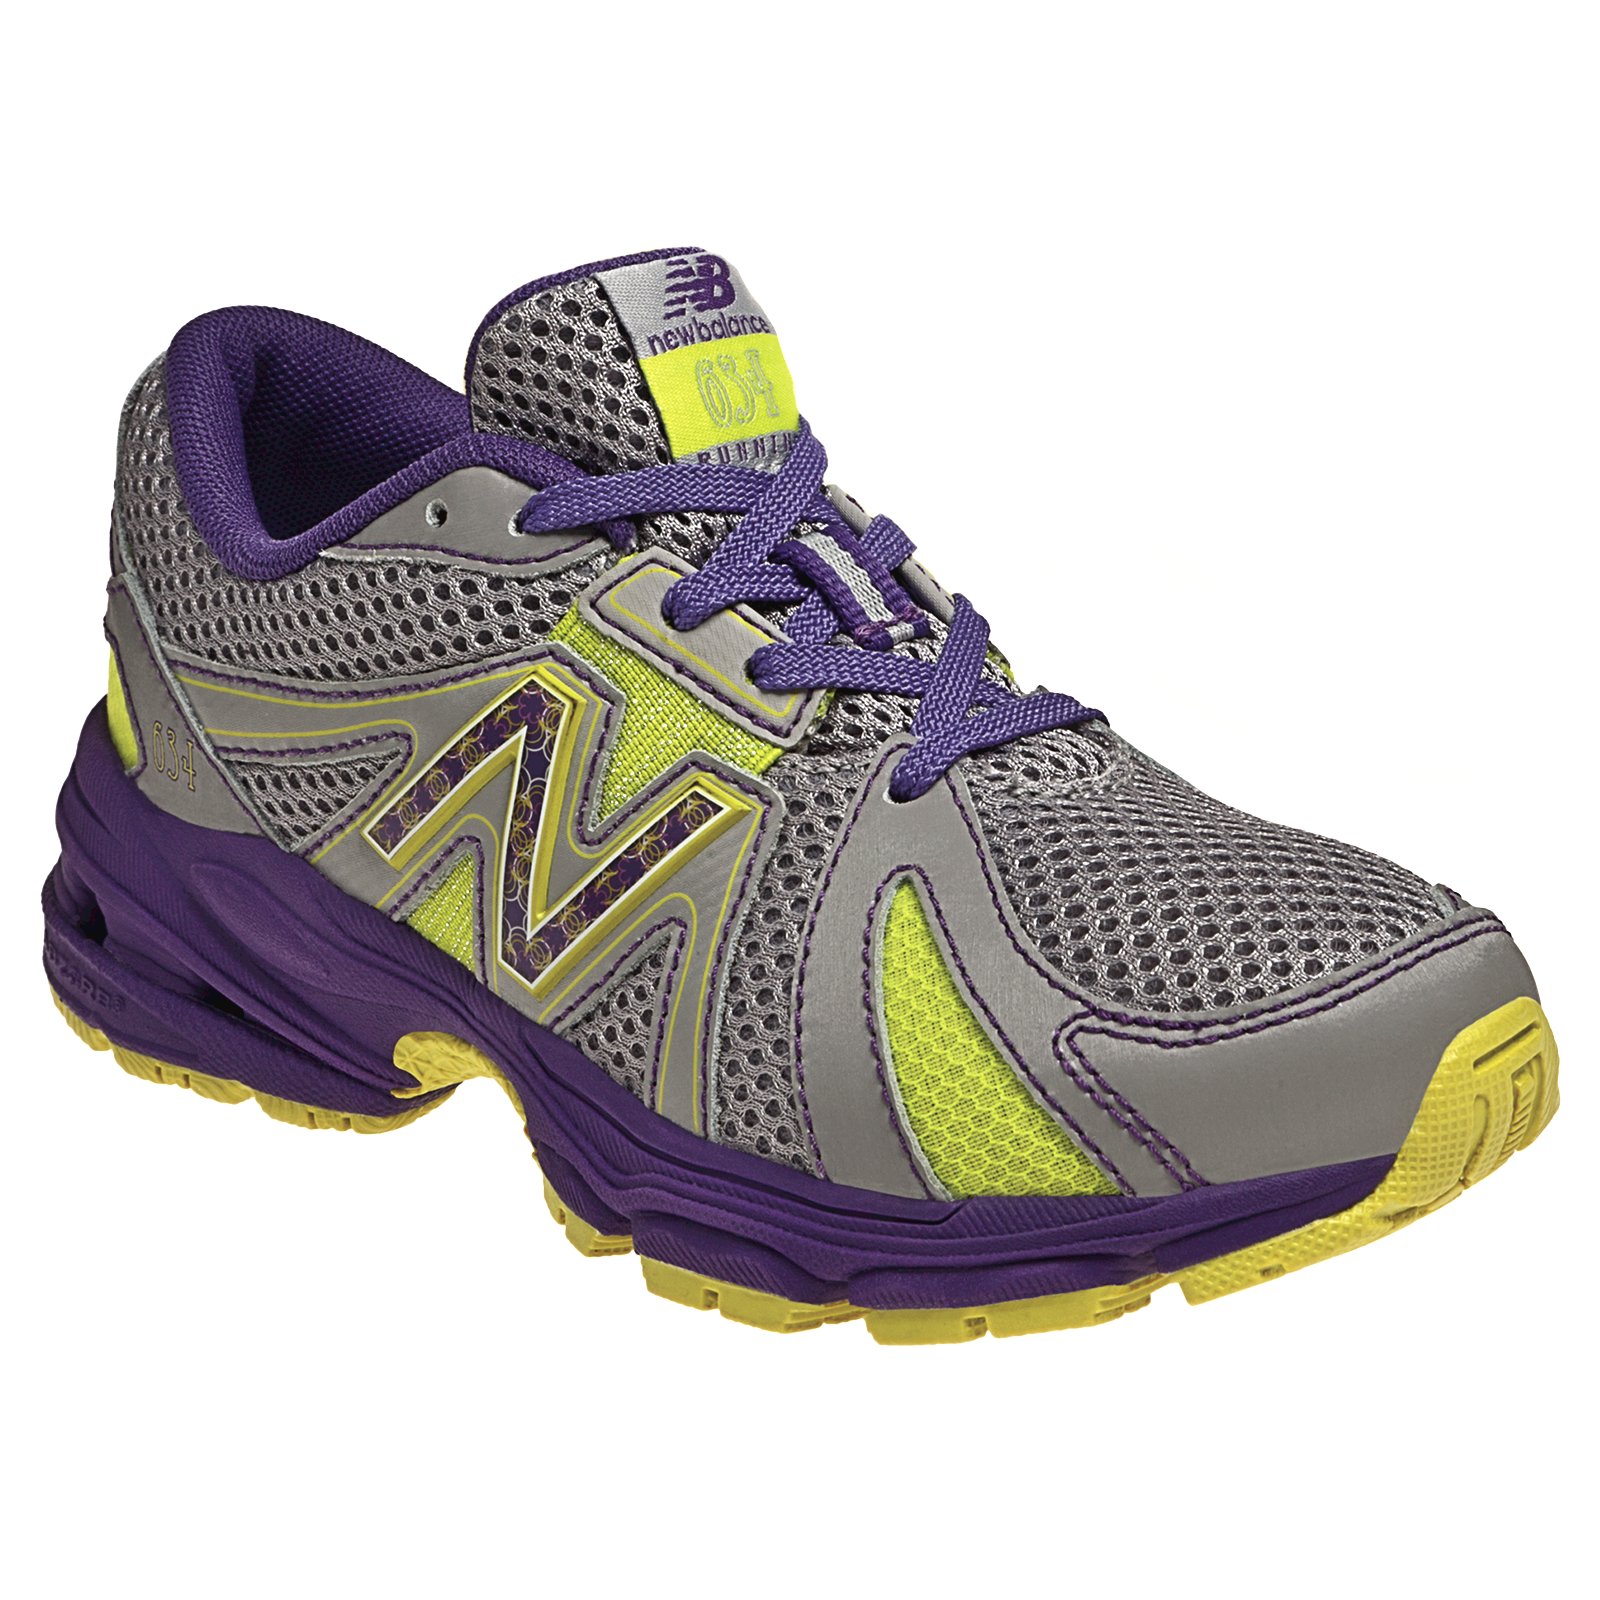 New Balance Girl's 634 Athletic Shoe Wide Width - Purple/Green